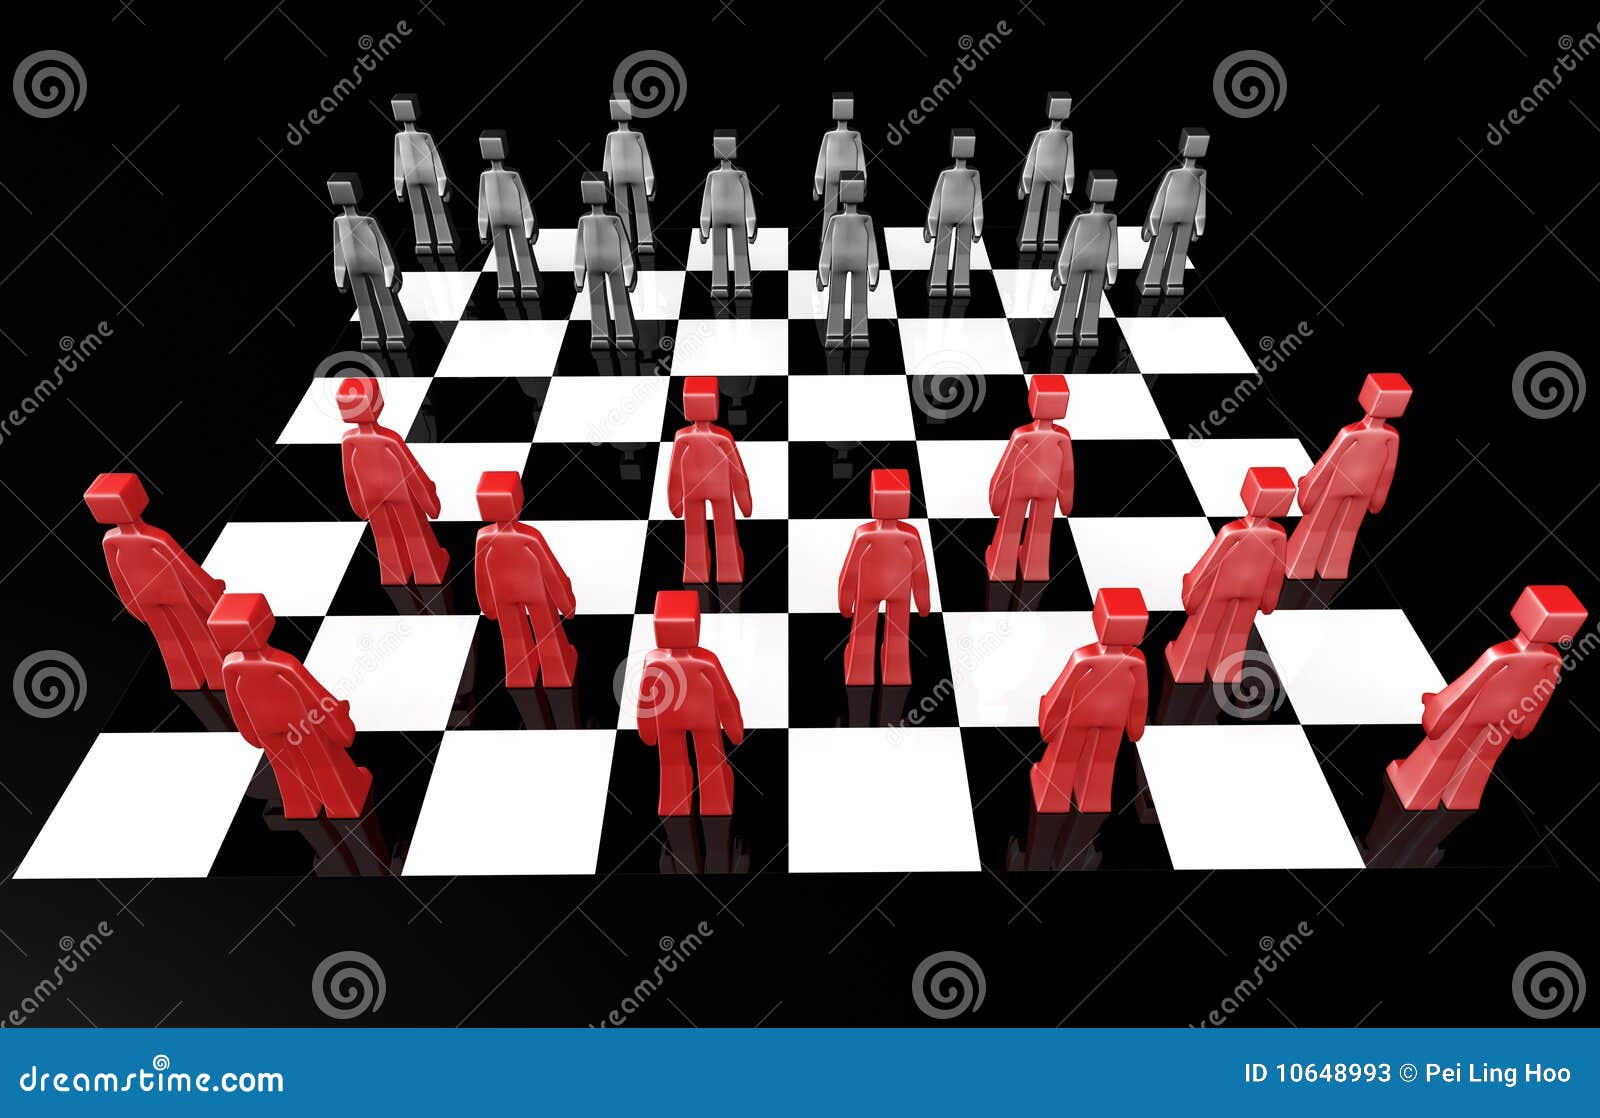 Checker board game concept stock illustration. Illustration of decision ...